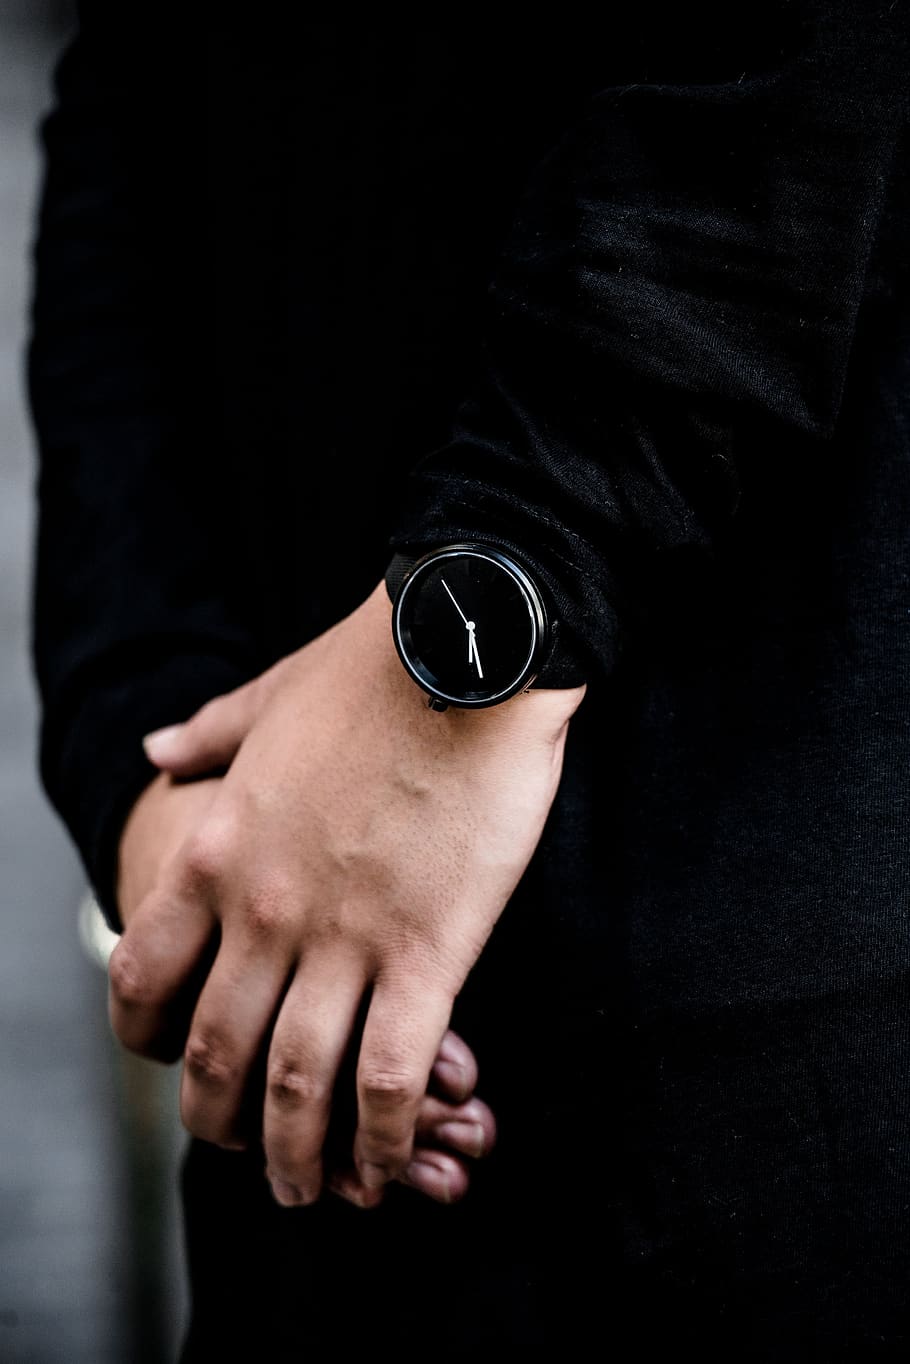 hitam, mode, menonton, jam tangan, waktu, arloji, manusia, sederhana, minimalis, bersih